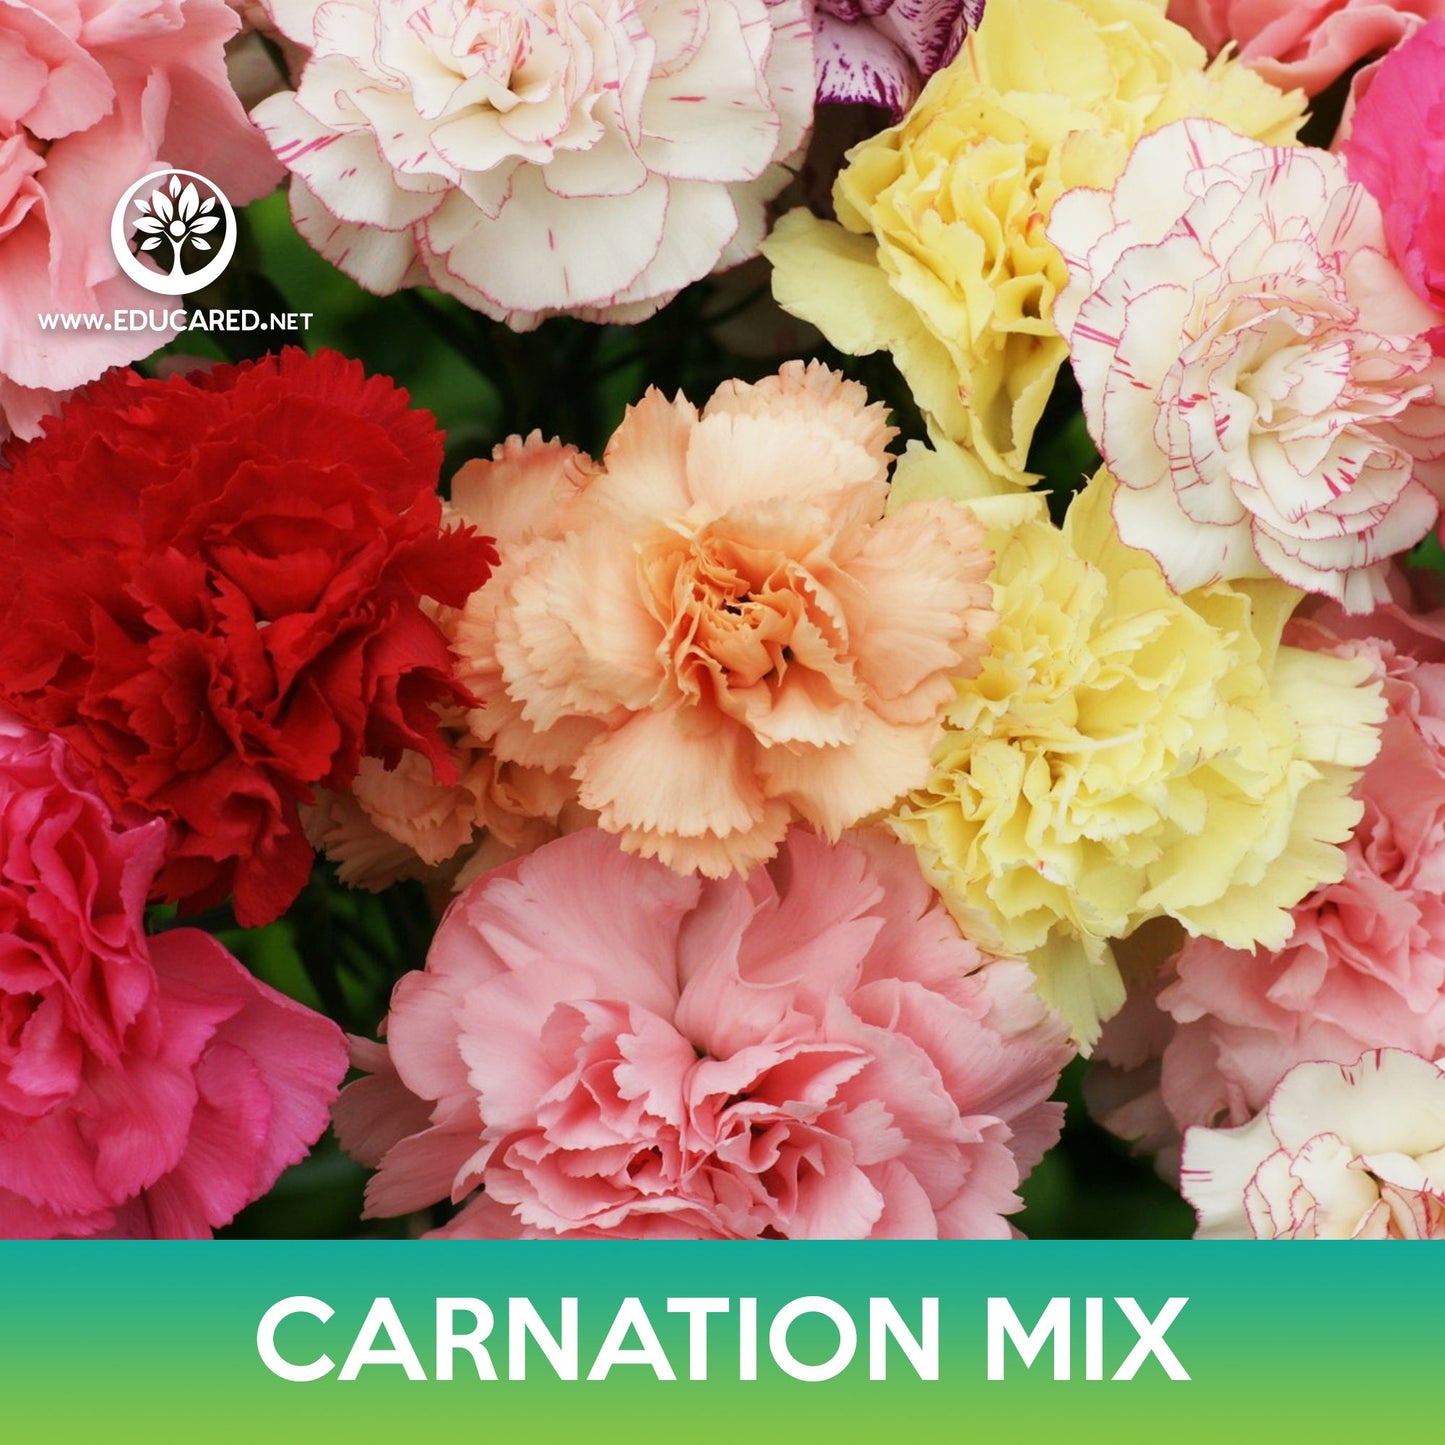 Carnation Flower Mix Seeds, Dianthus caryophyllus